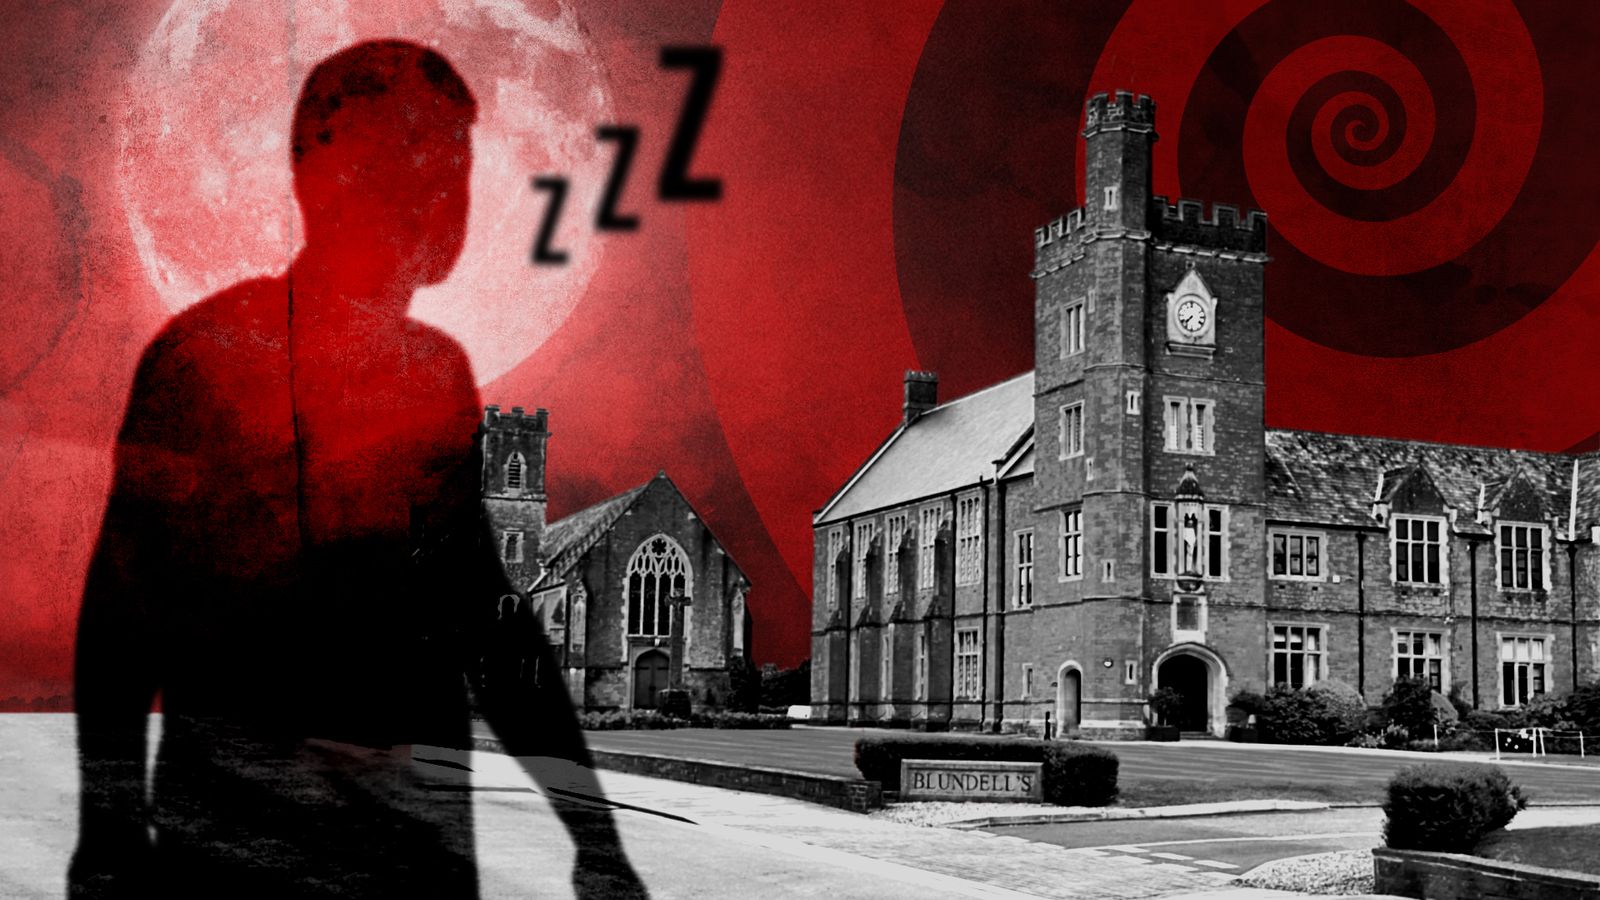 'I was sleepwalking': Can you kill someone while you're asleep?